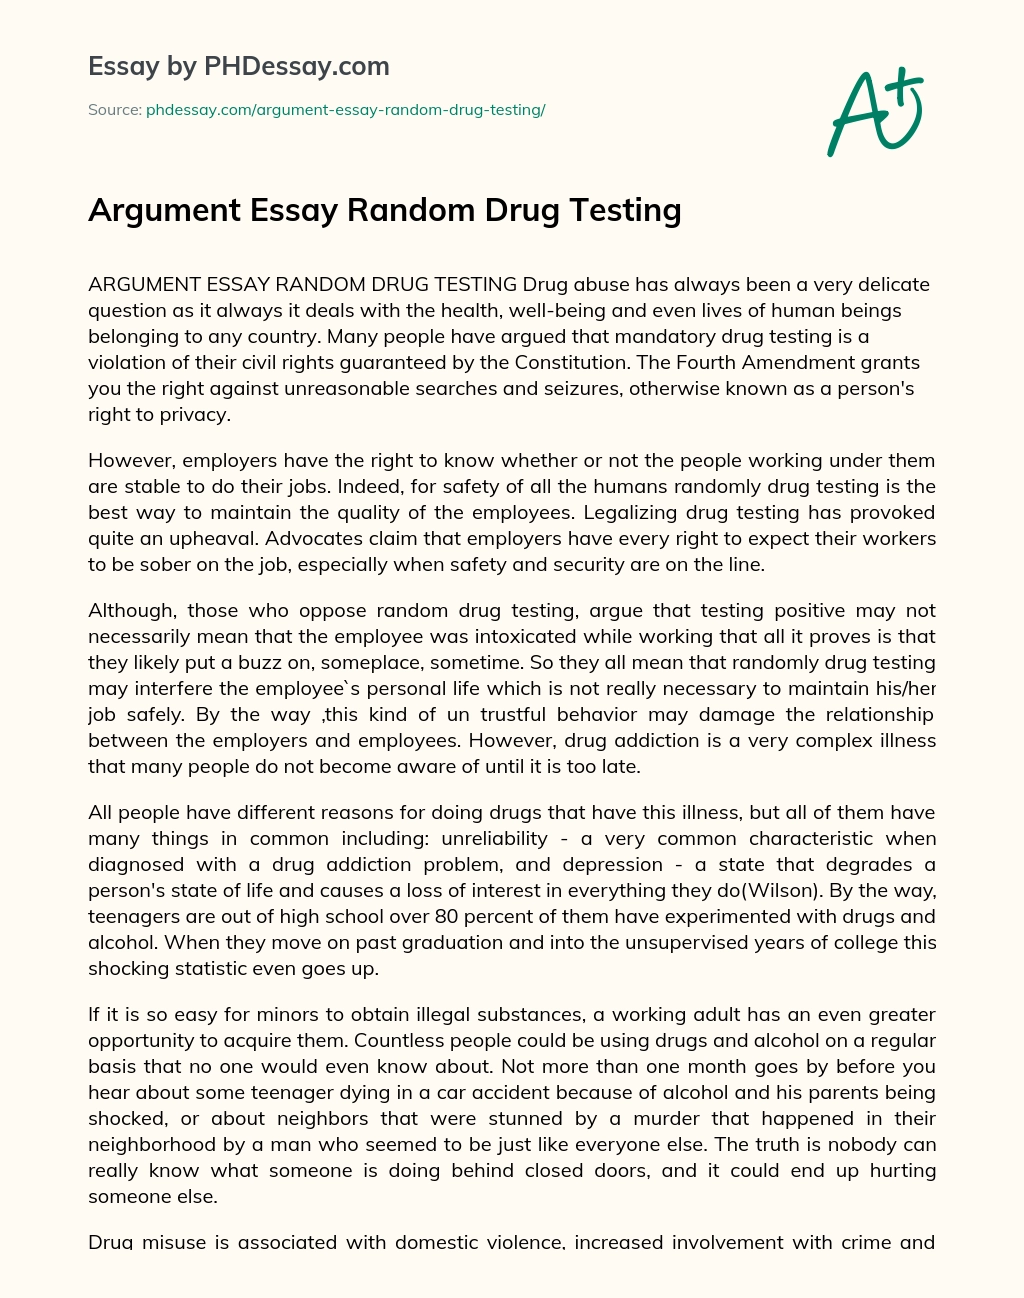 Argument Essay Random Drug Testing essay